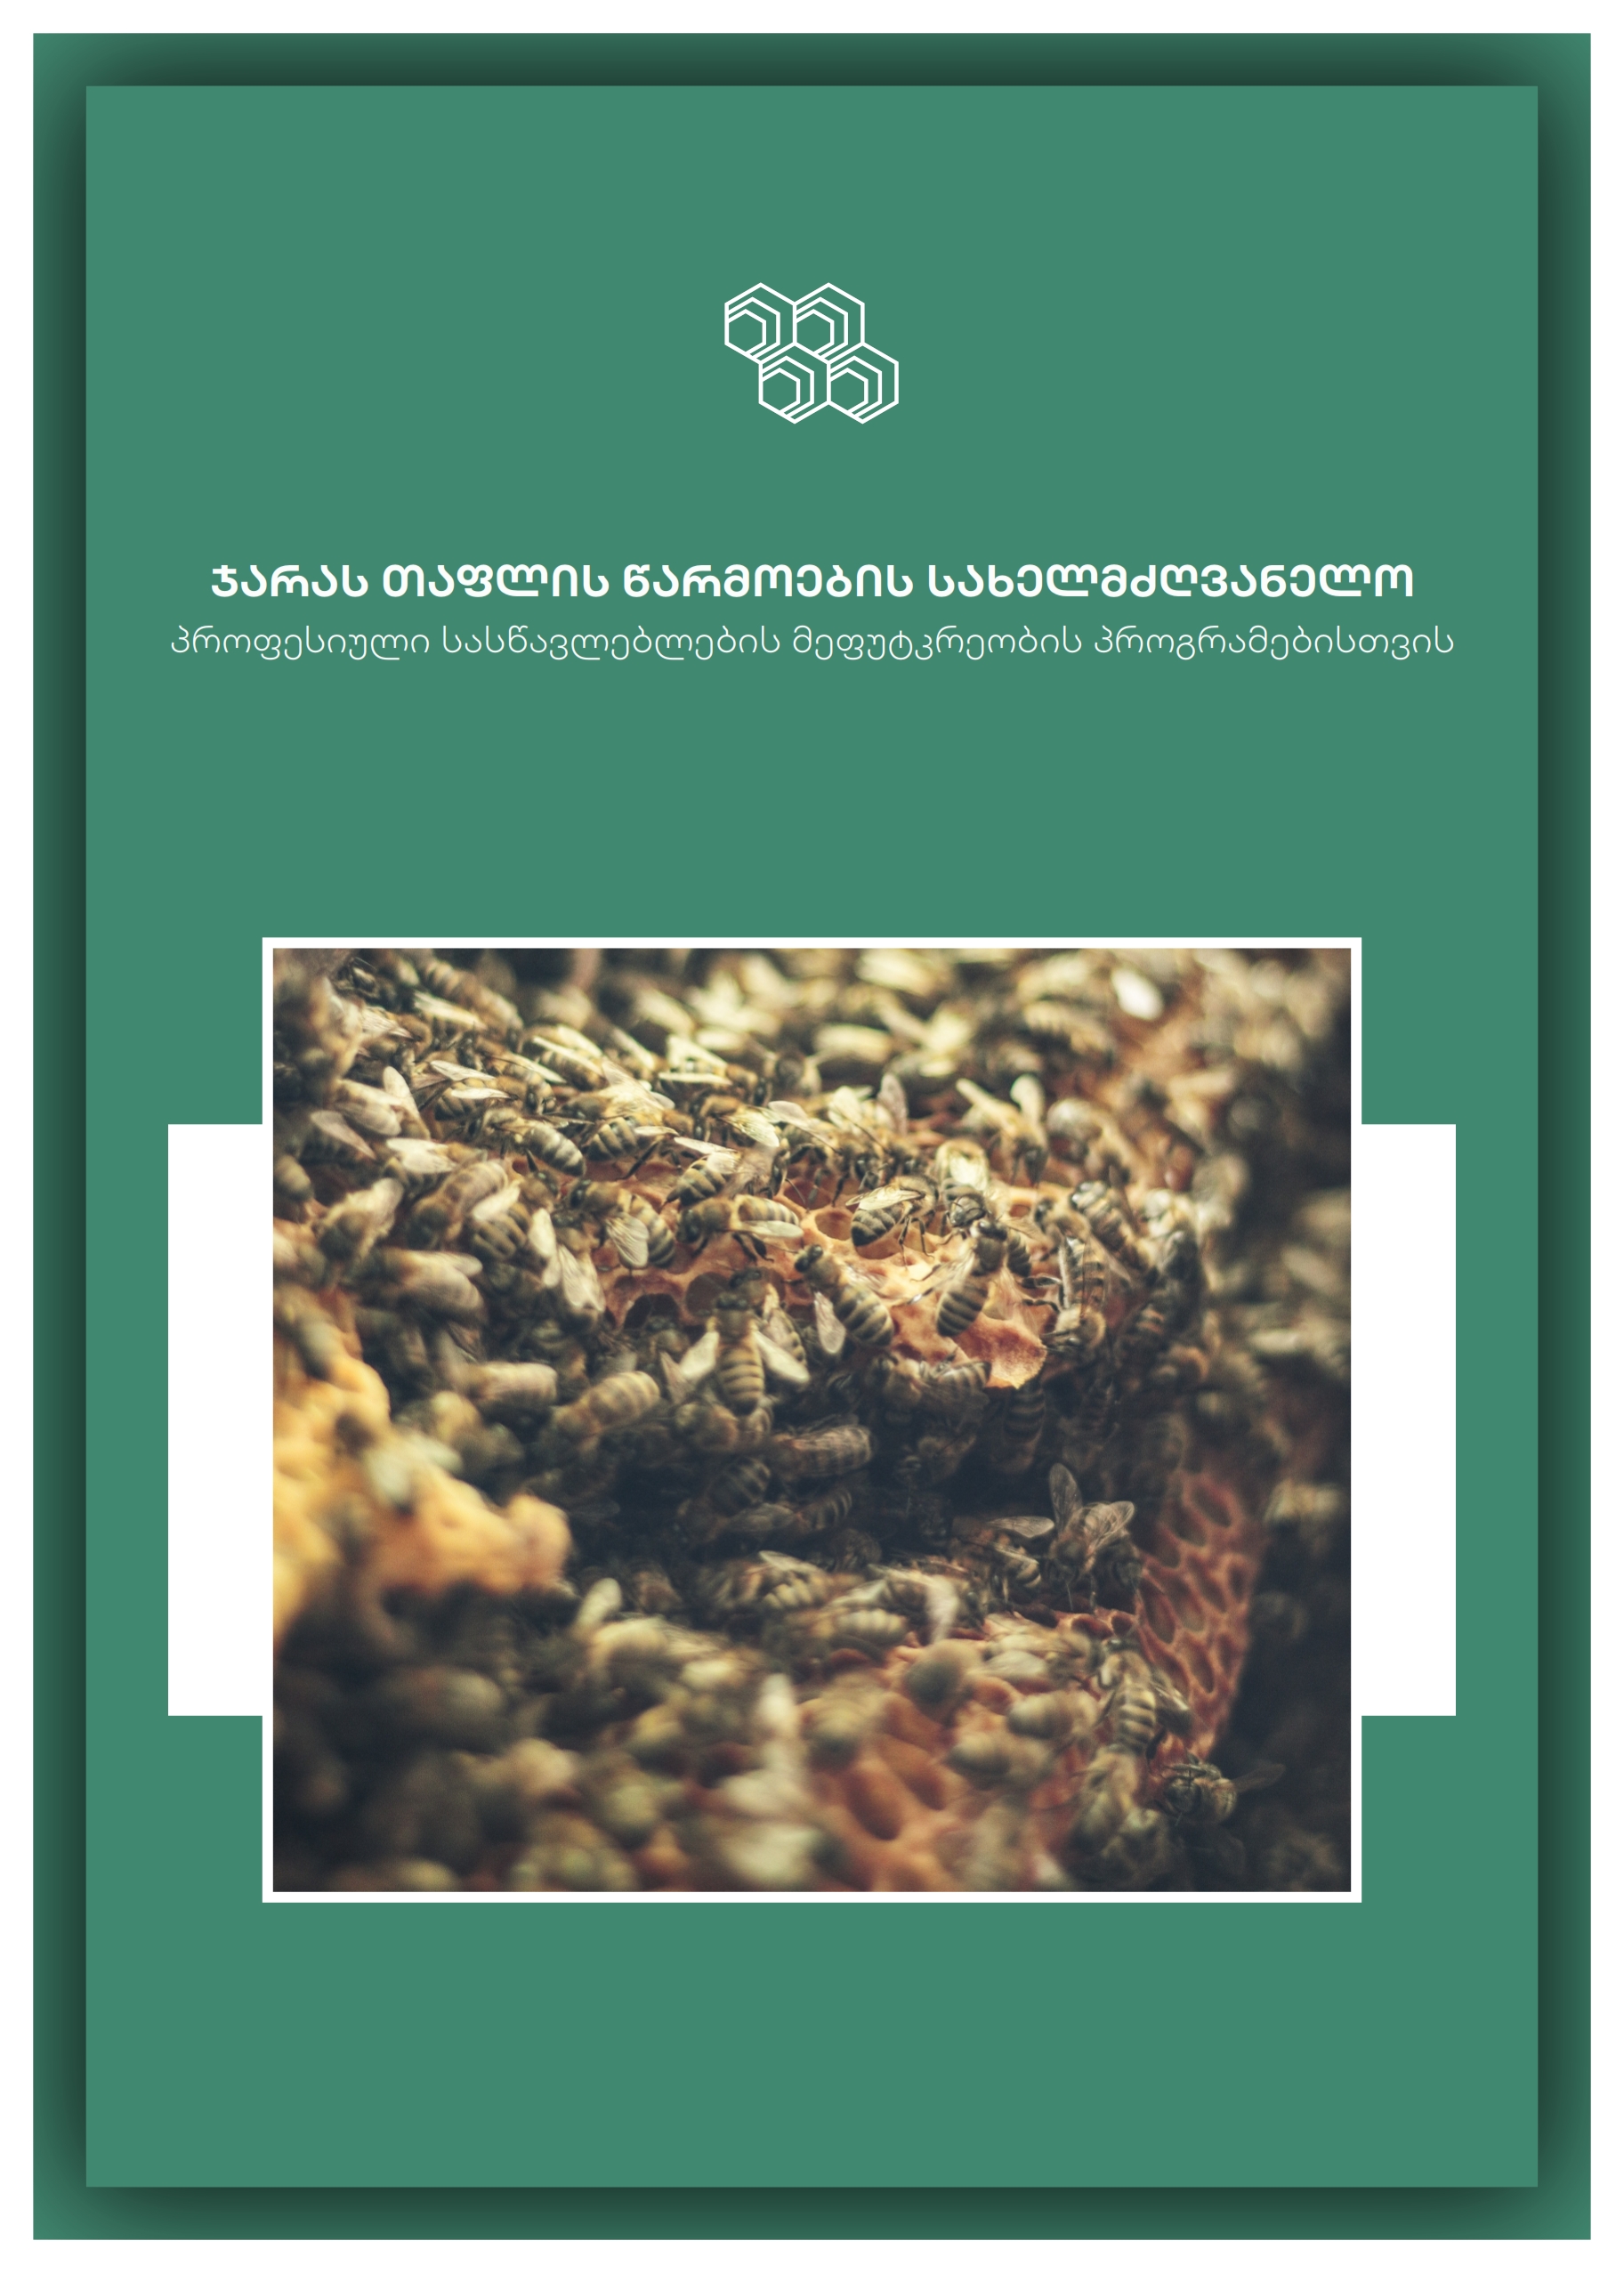 Jara Honey Production Handbook - GEO 